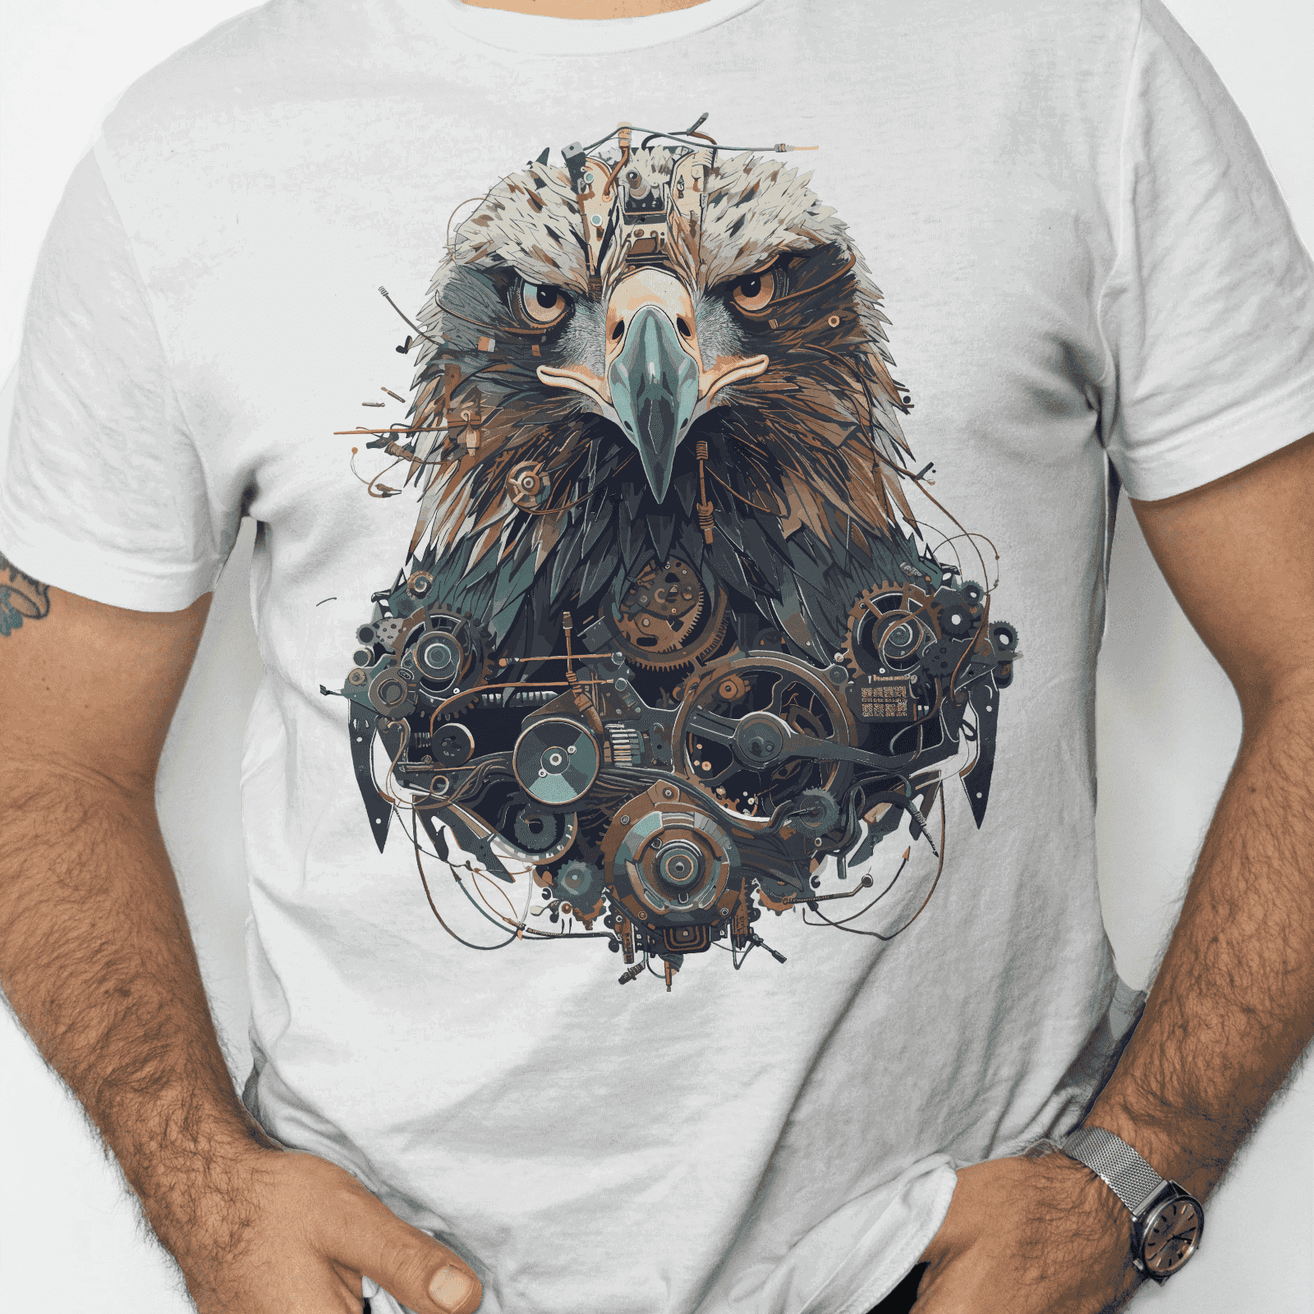 Eagle Vision Premium Graphic Design Men's T-Shirt – Exquisite Mechanical Artistry for Discerning Taste